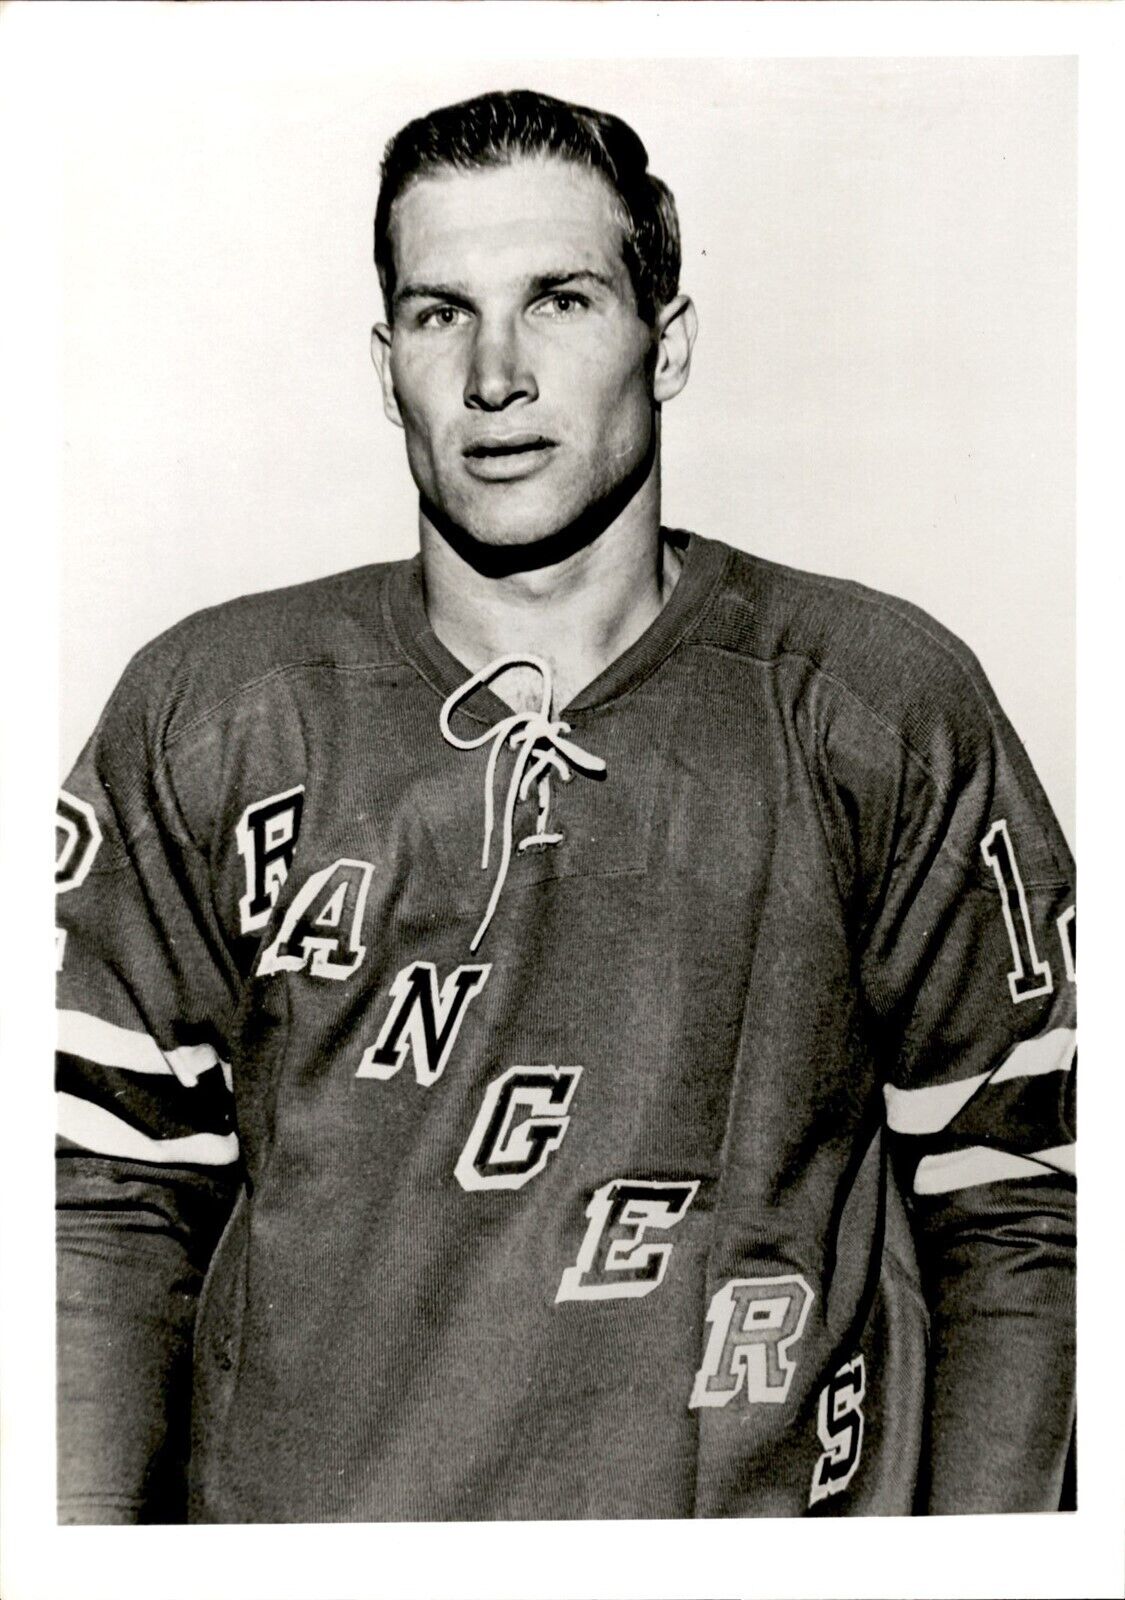 PF28 Original Photo JIM MIKOL 1964-65 NEW YORK RANGERS NHL ICE HOCKEY DEFENSE